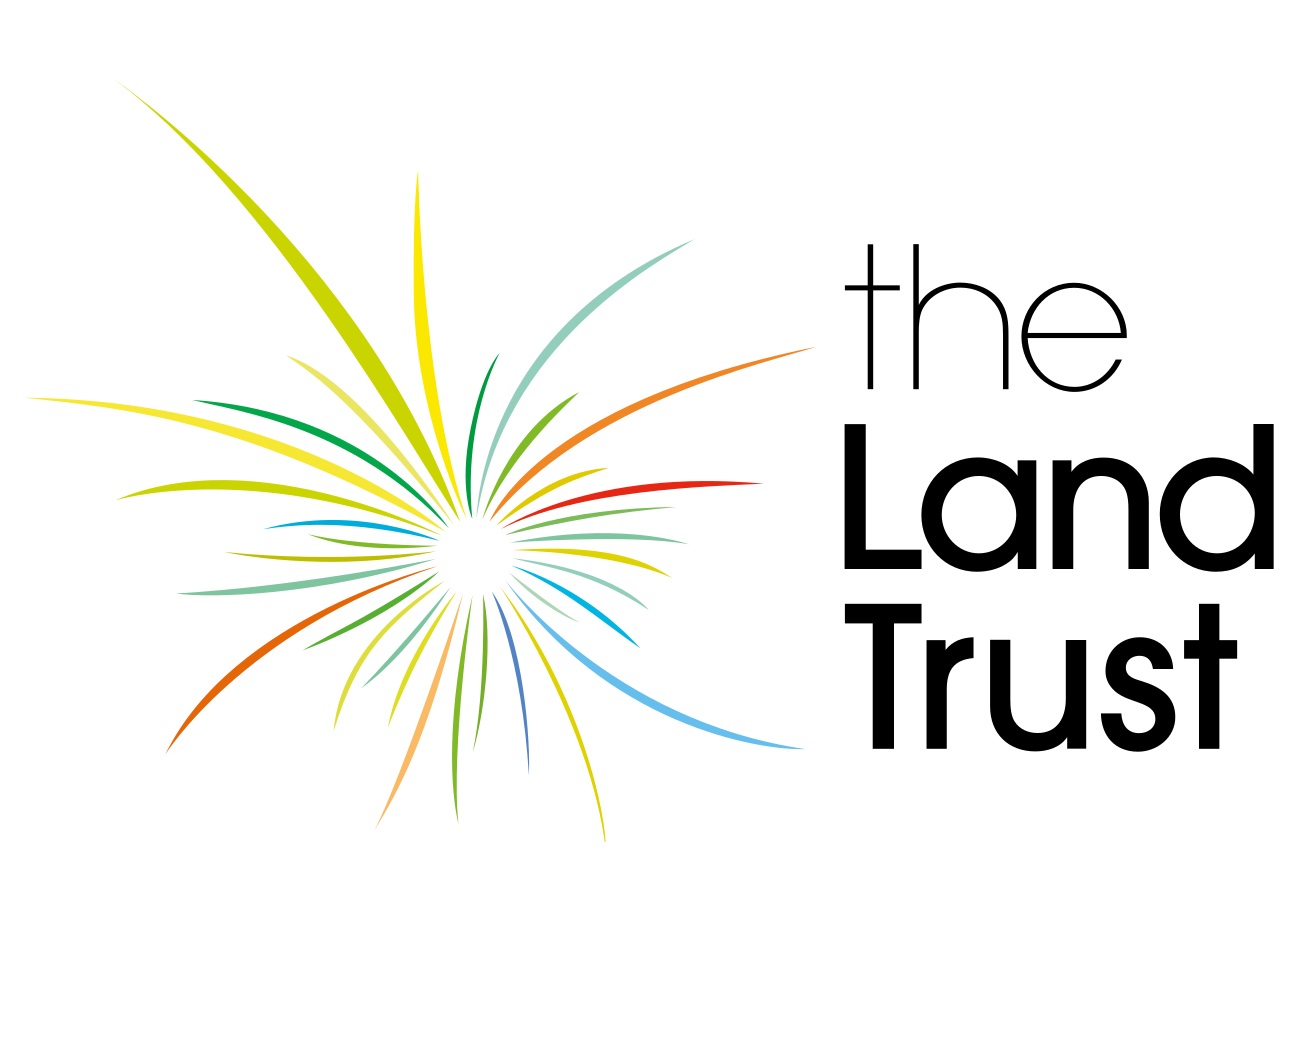 The Land Trust logo